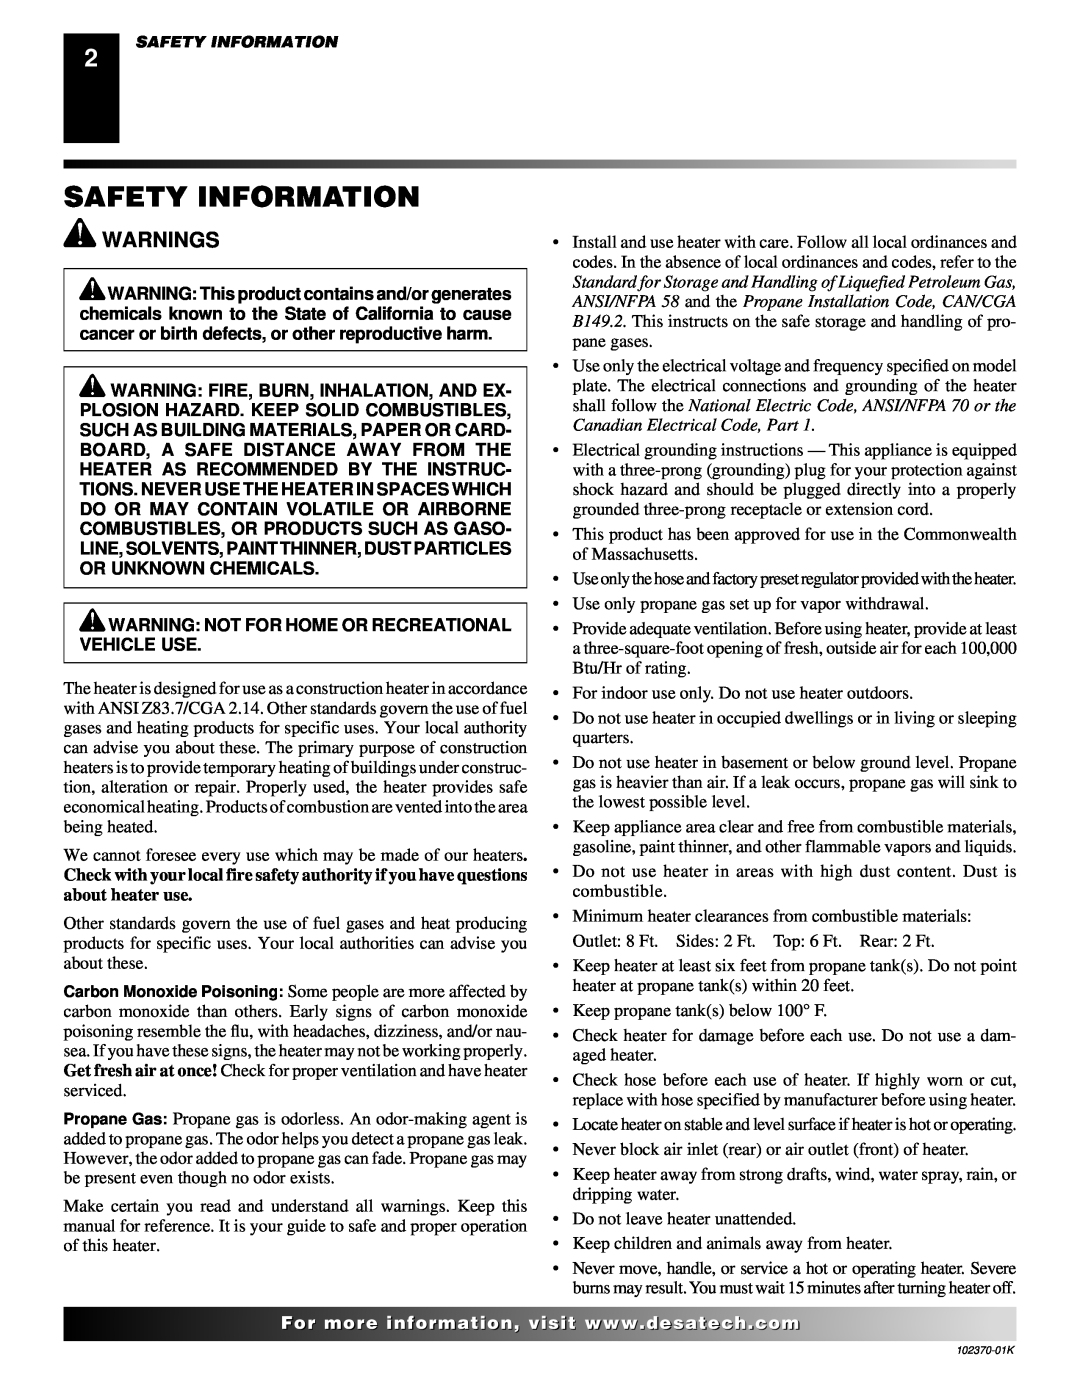 Desa REM100LP, BLP100 owner manual Safety Information, Warnings, Warning Not For Home Or Recreational Vehicle Use 